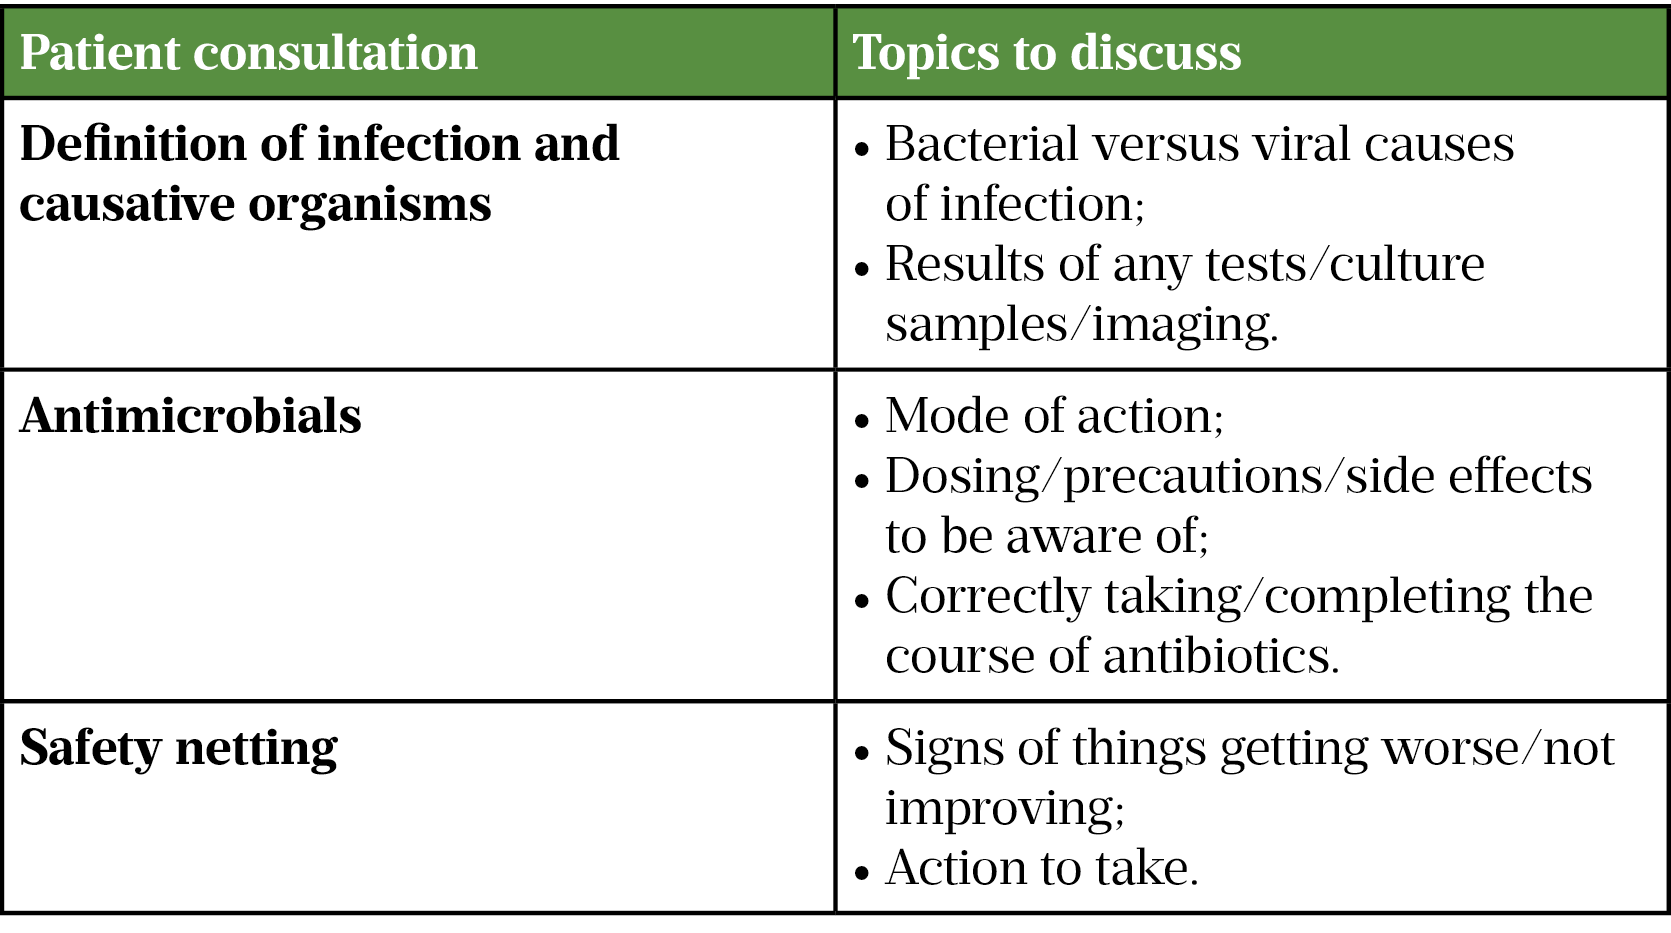 Table 1: Patient consultation